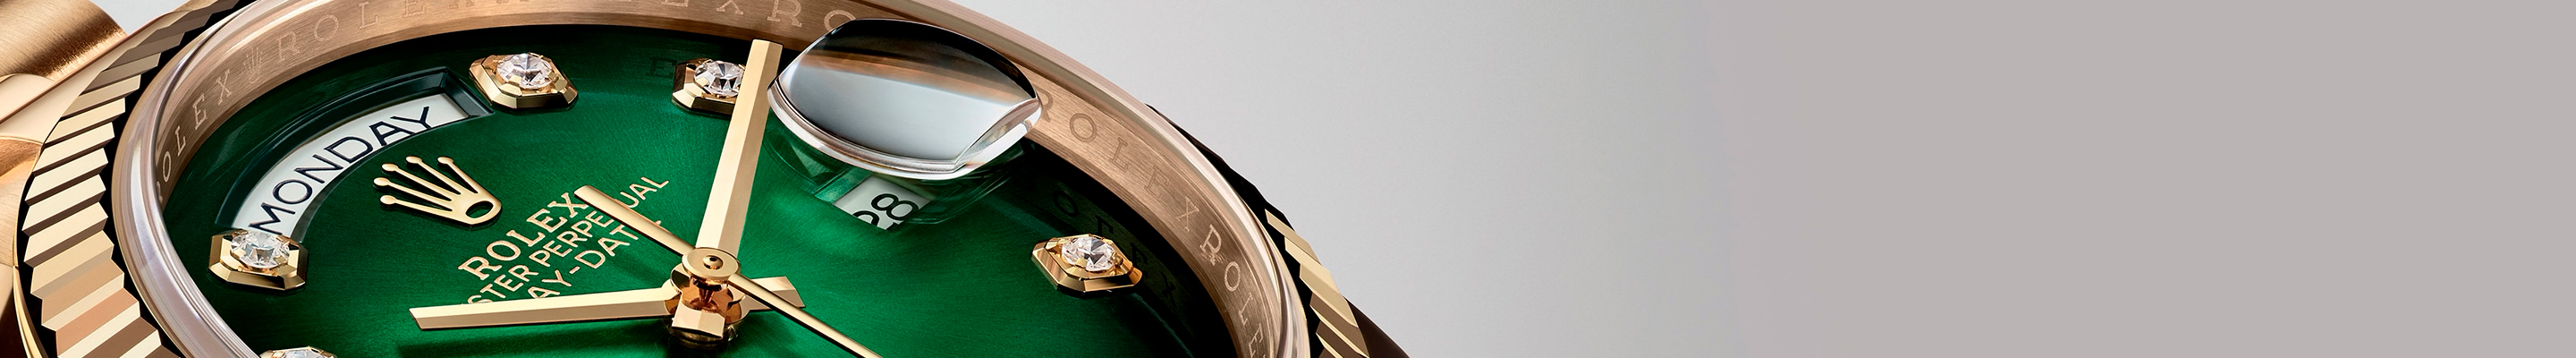 Day-Date | Rolex Official Retailer - Srichai Watch